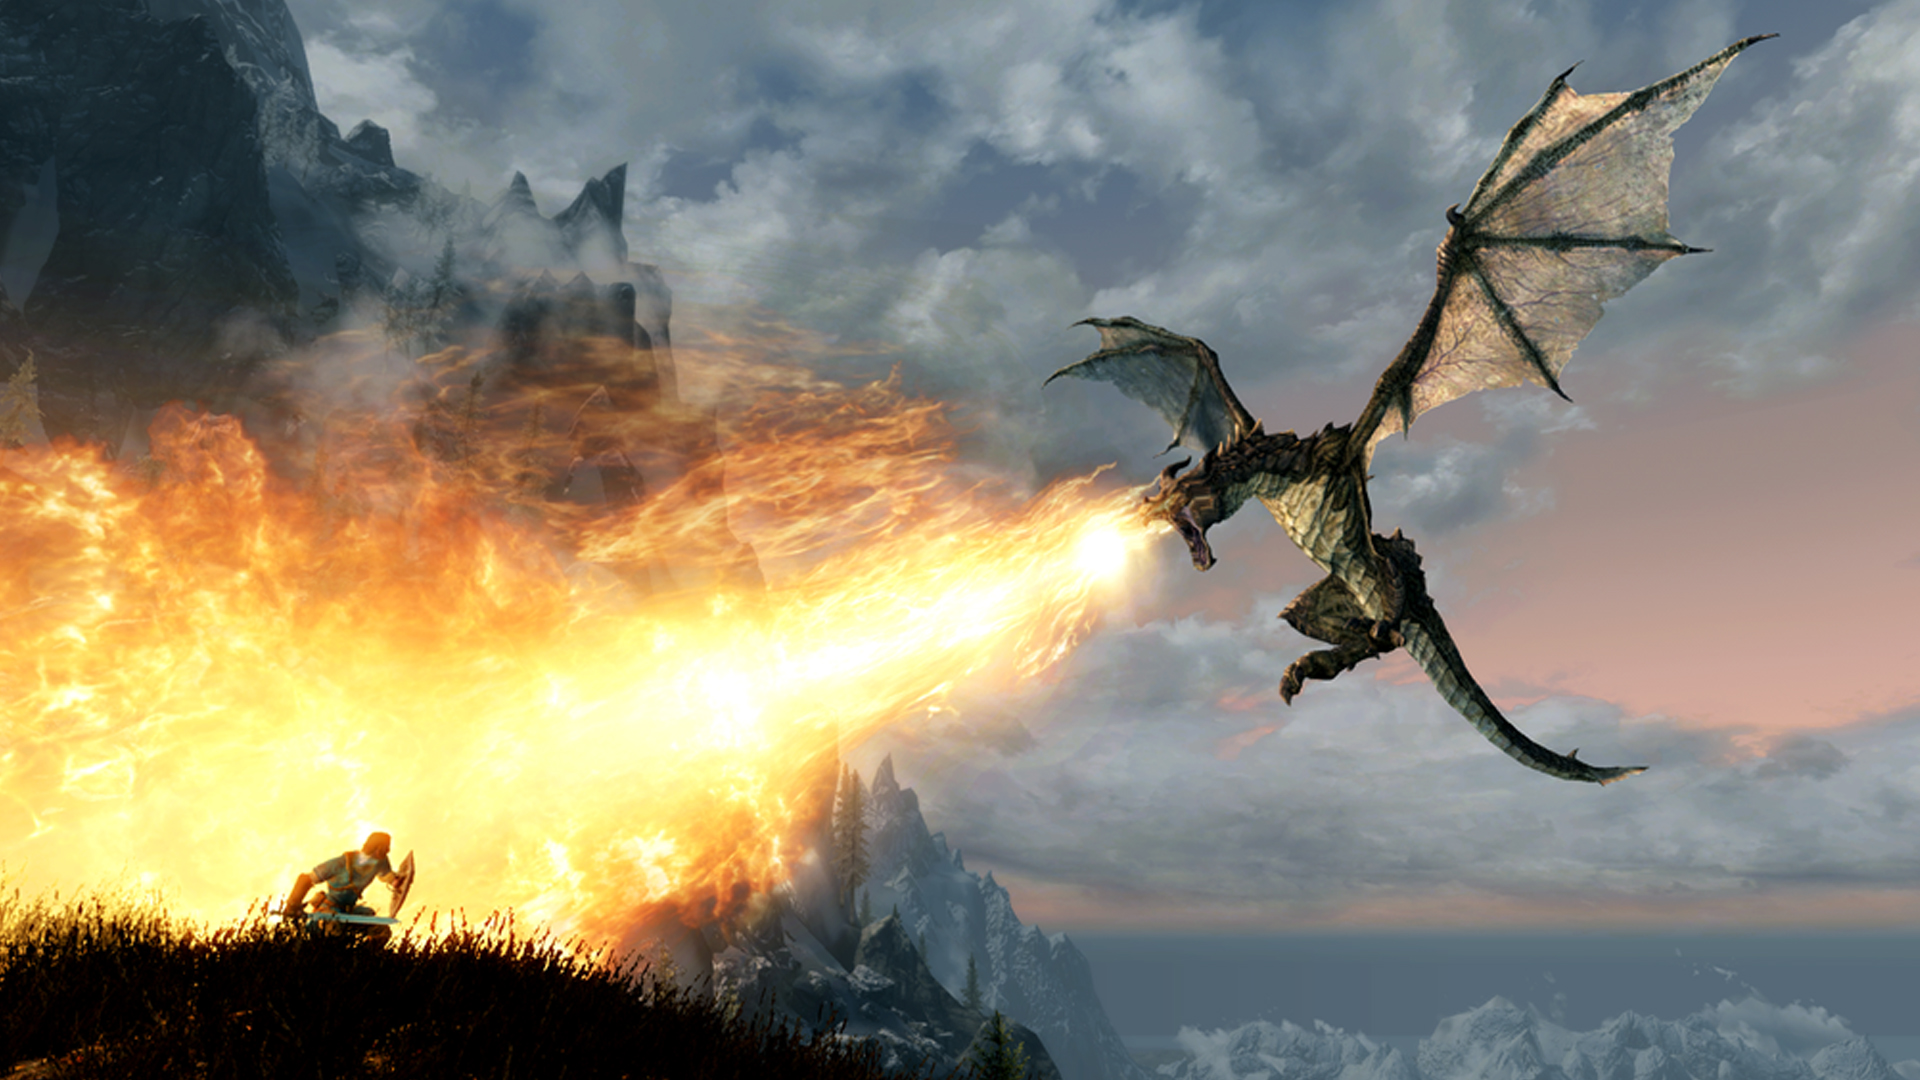 A dragon blasts a man with a shield in Skyrim